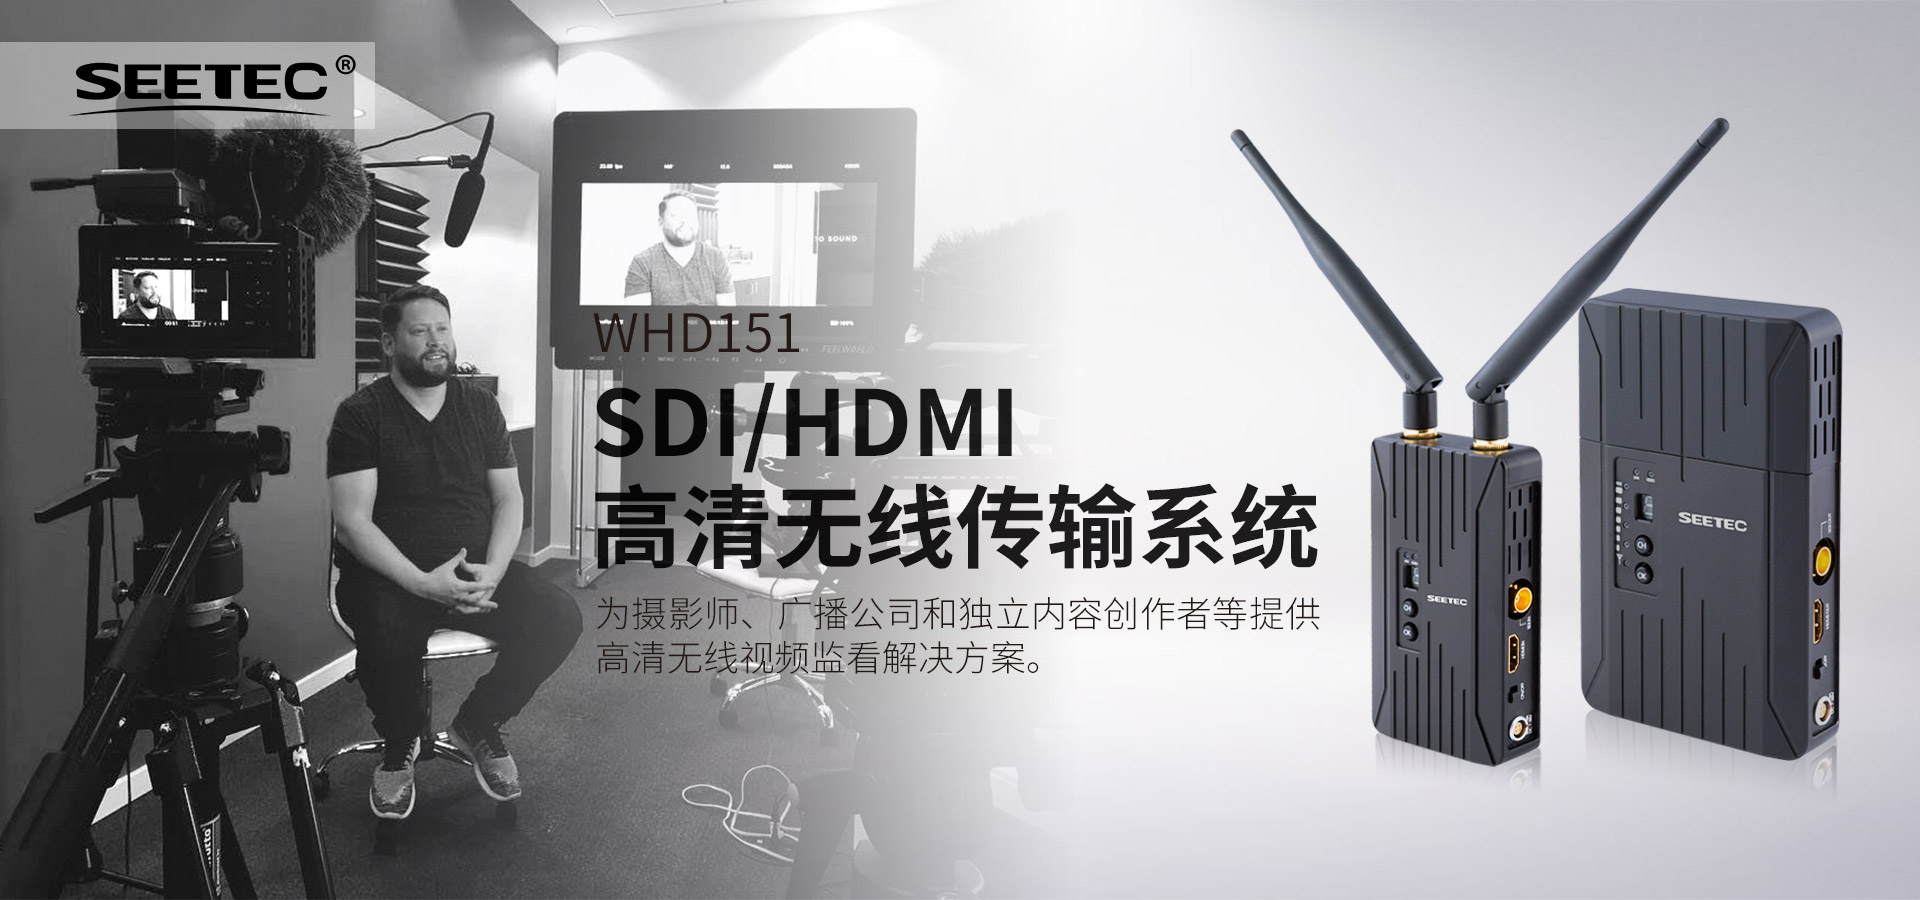 sdi-hdmi高清无线图传